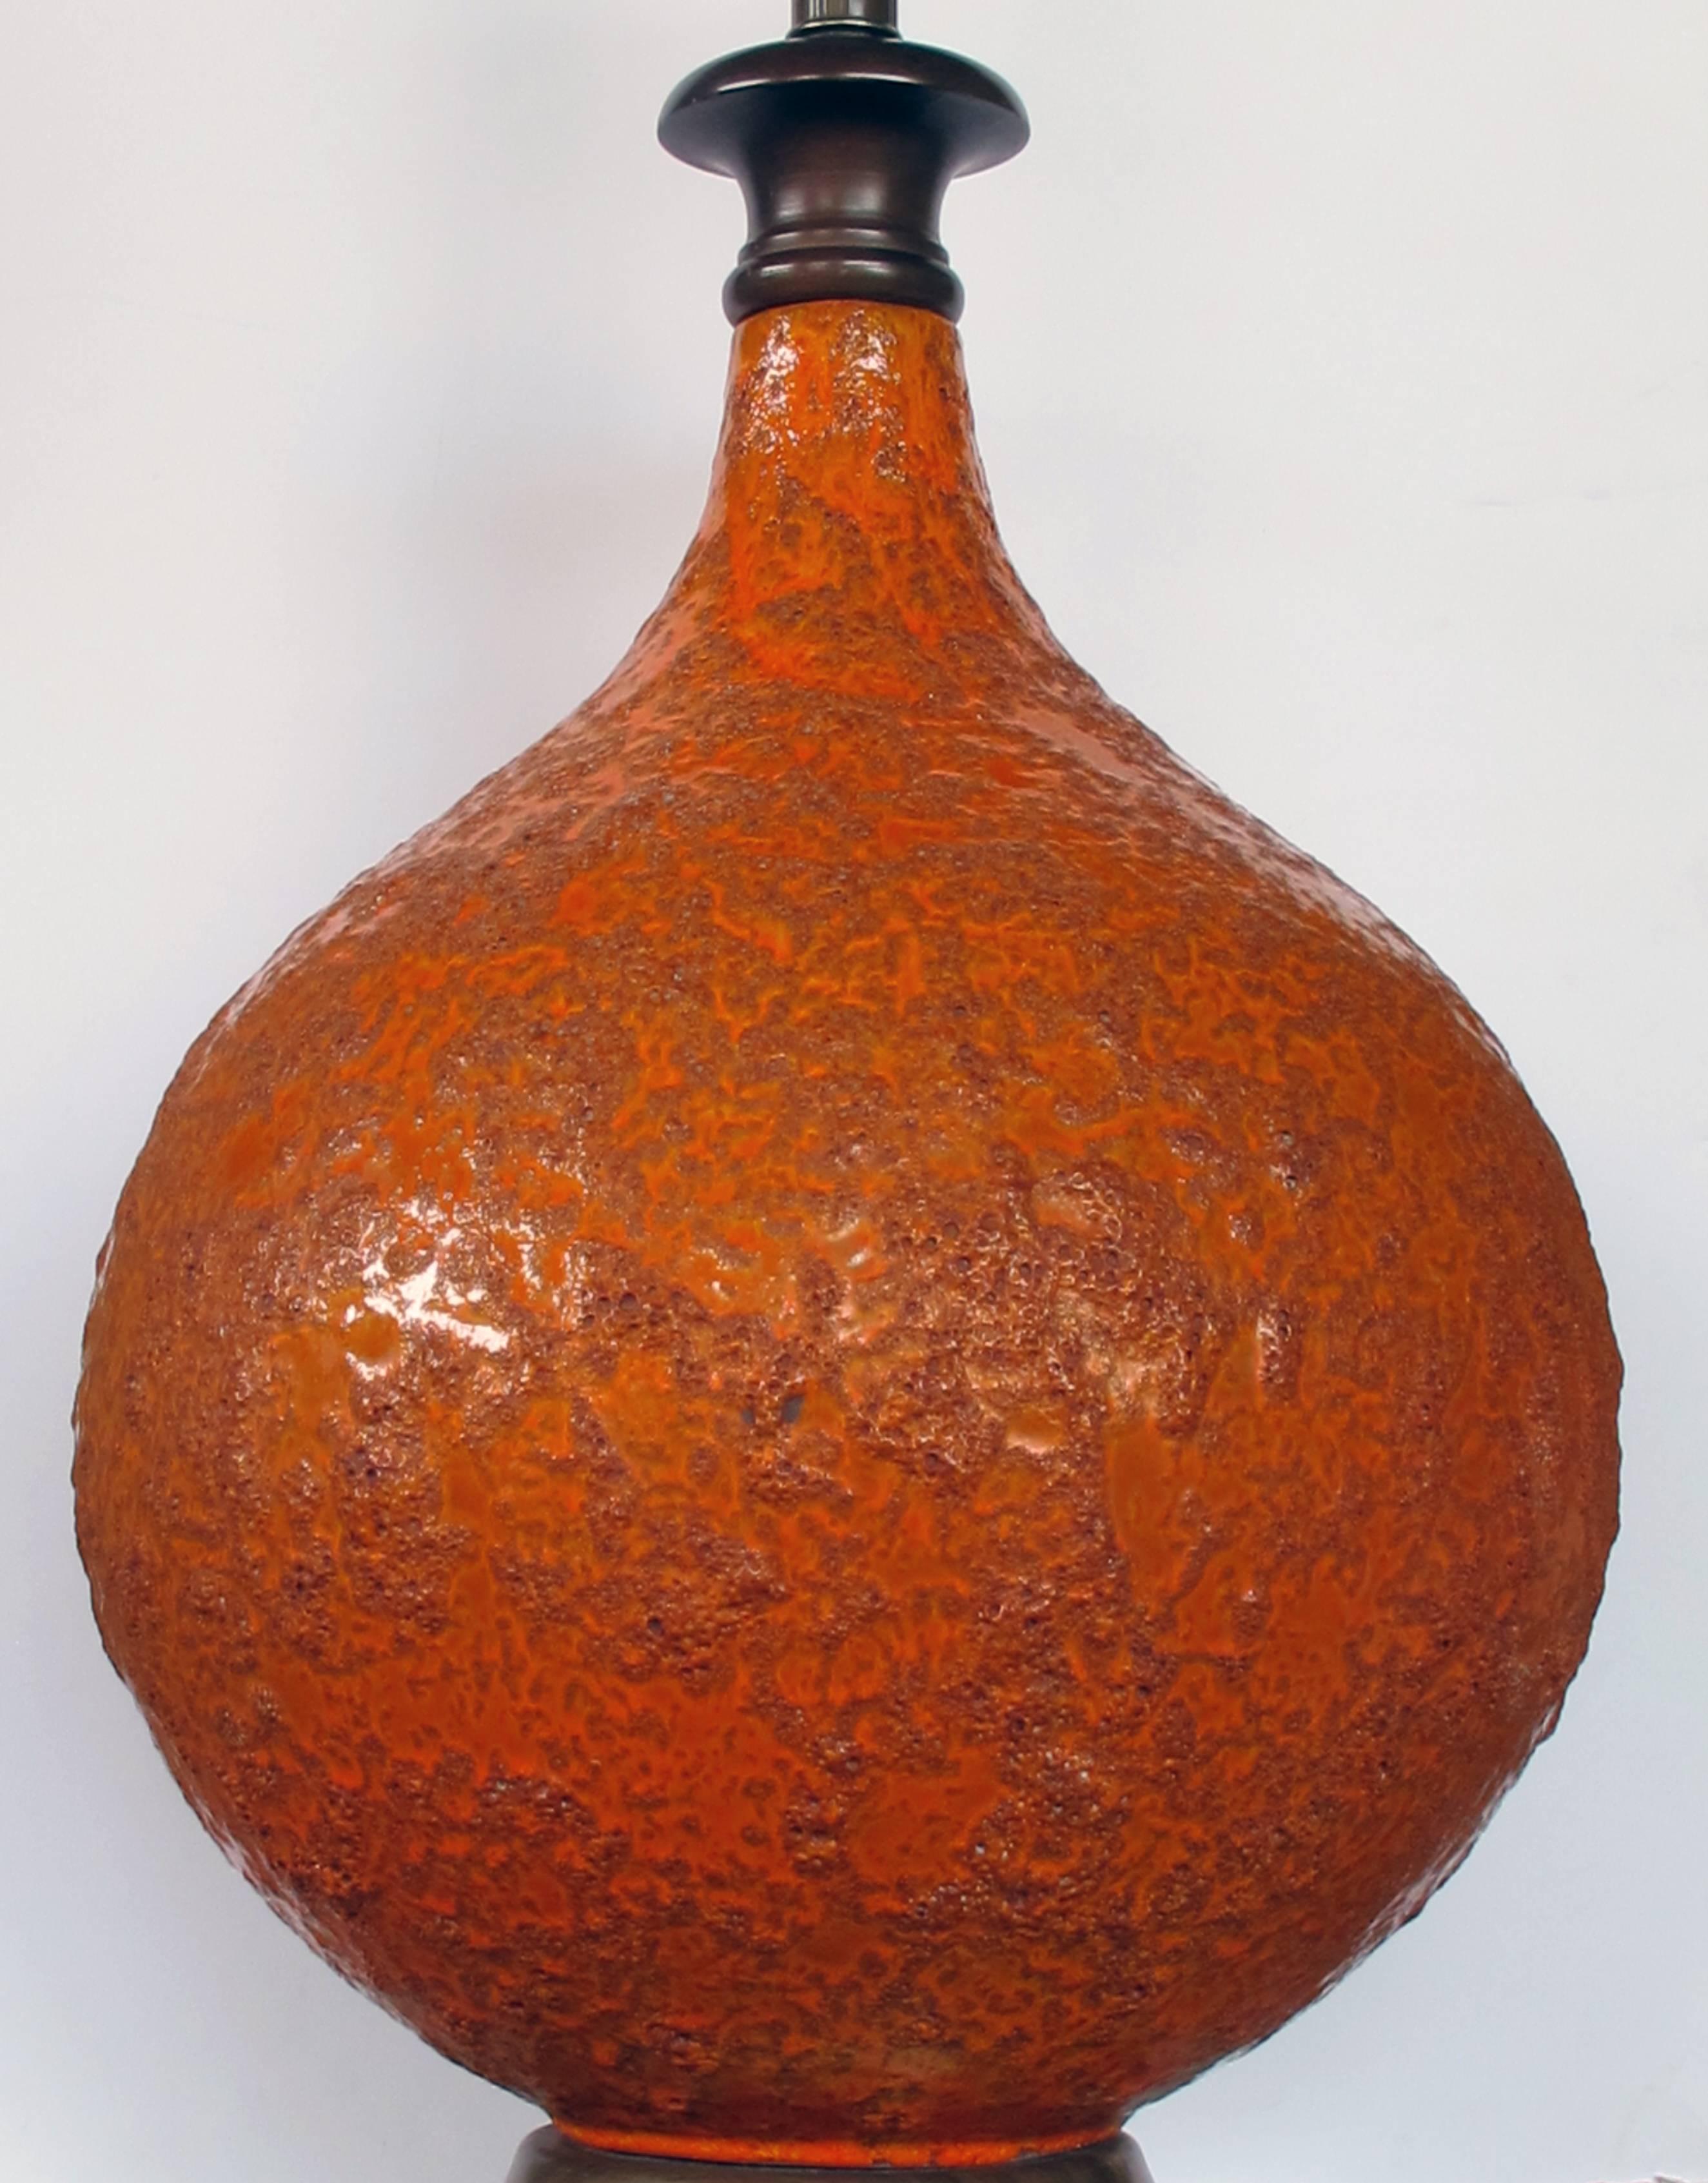 The large bottle-form lamp in a richly-textured burnt-orange crater-glaze.